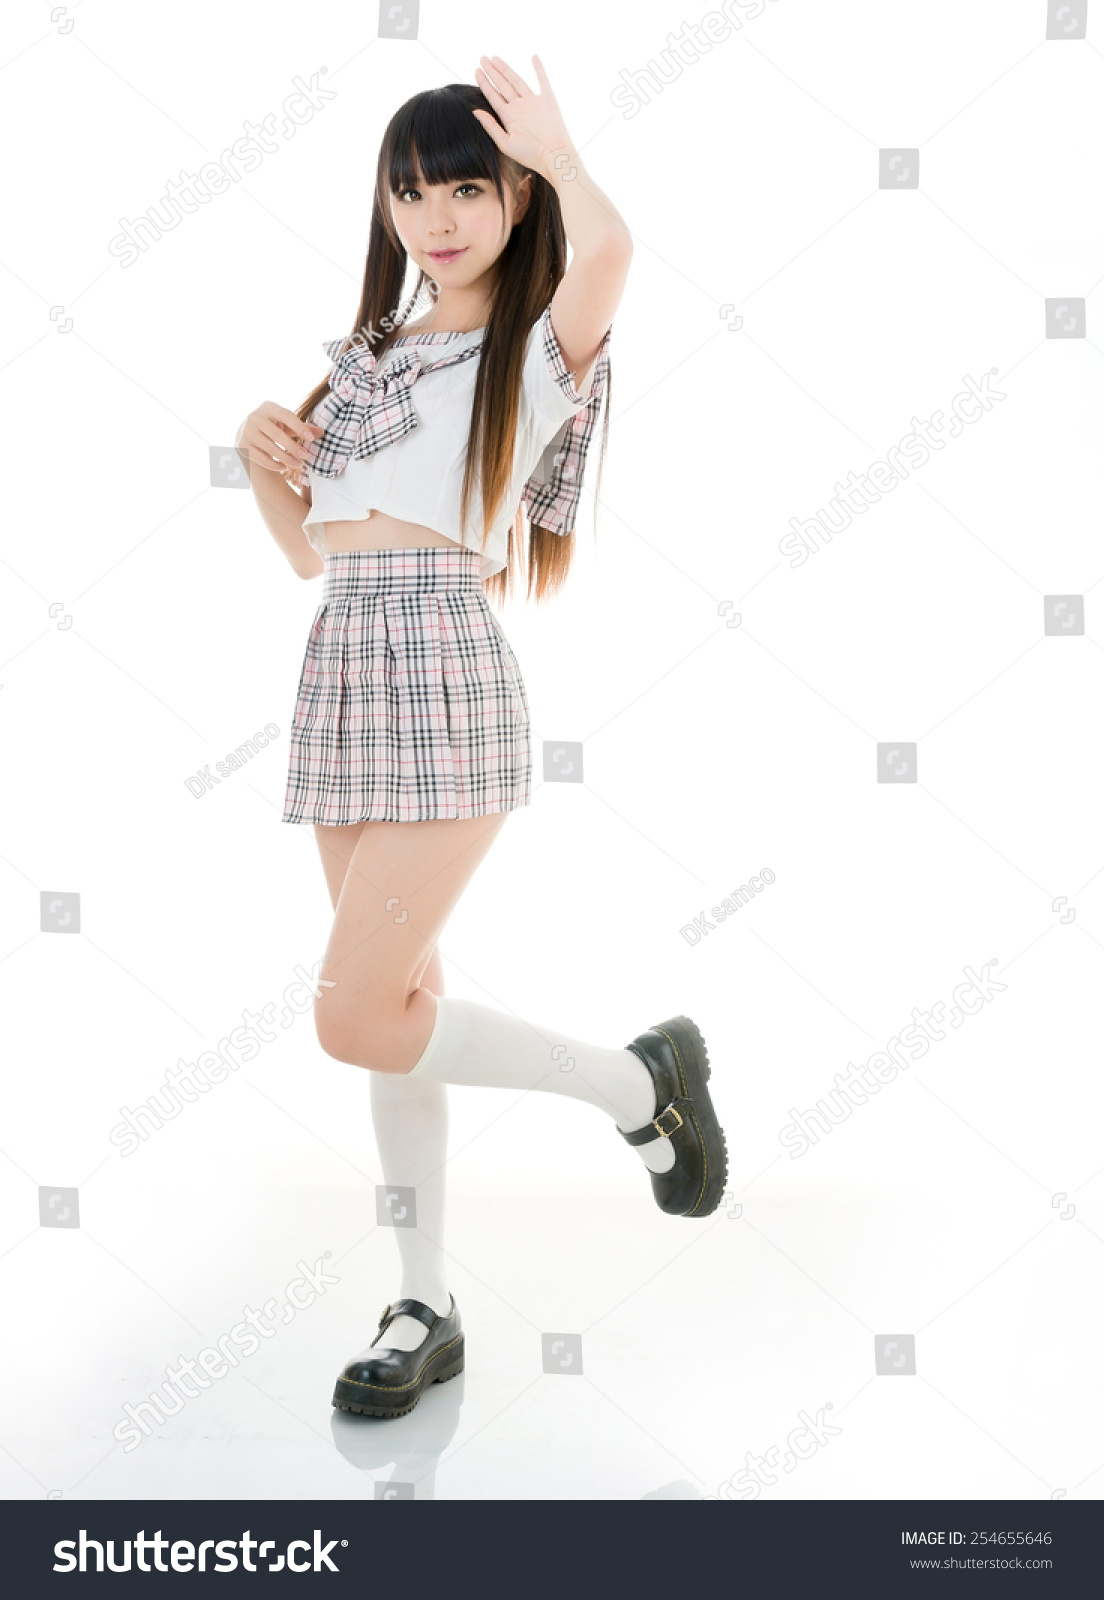 Hot Girls In School Uniform